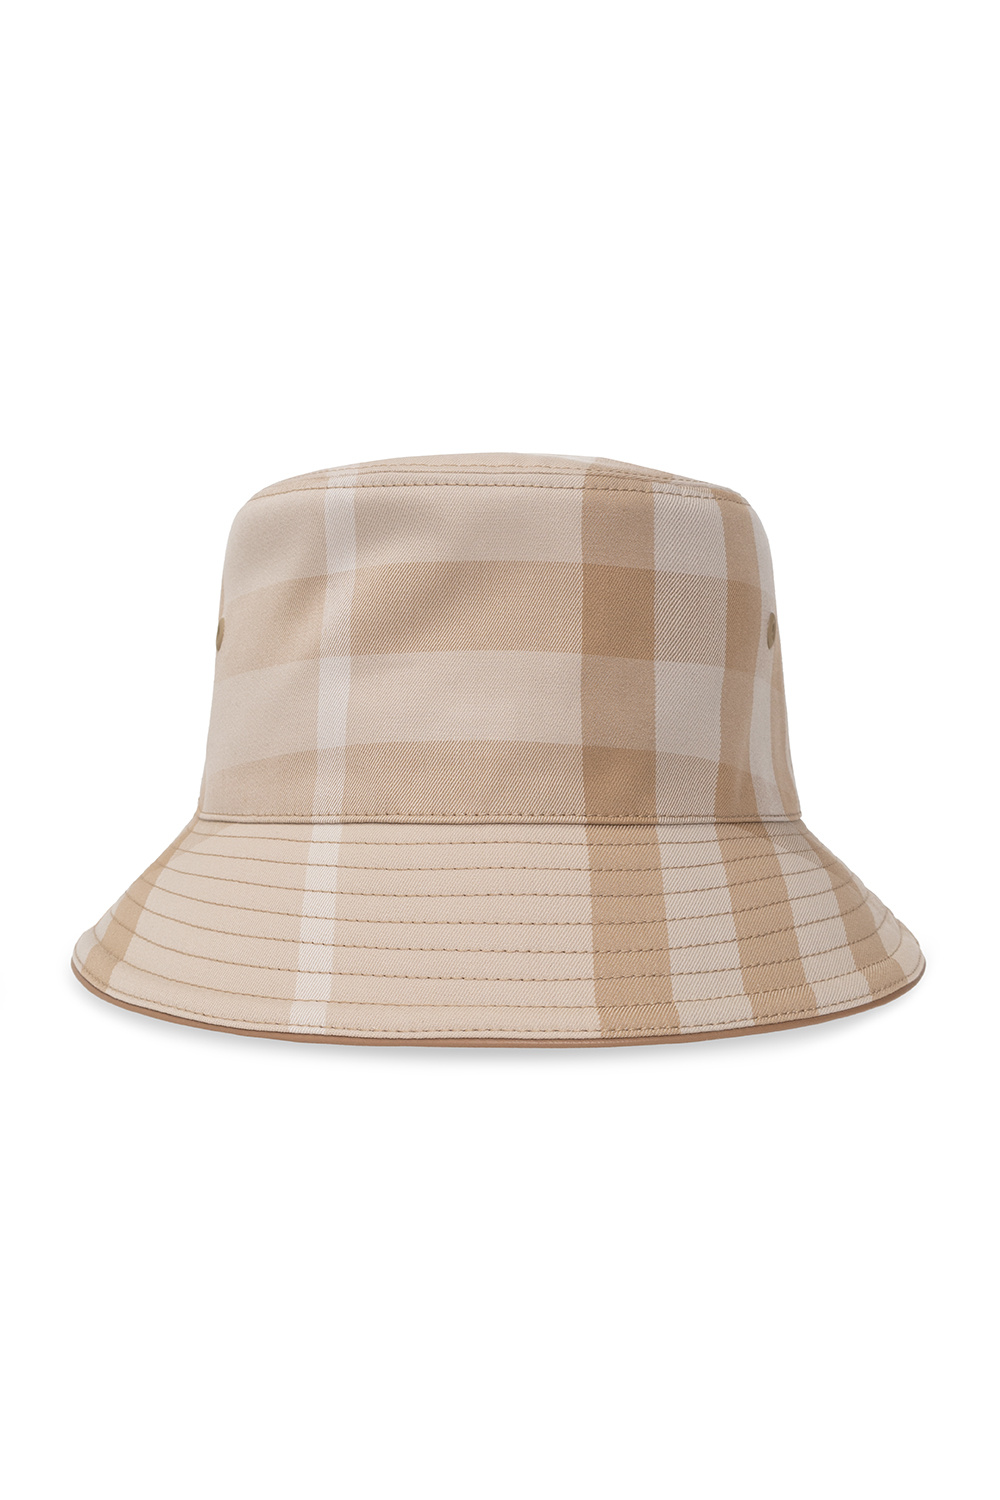 Burberry Gucci wide-brim straw-effect hat